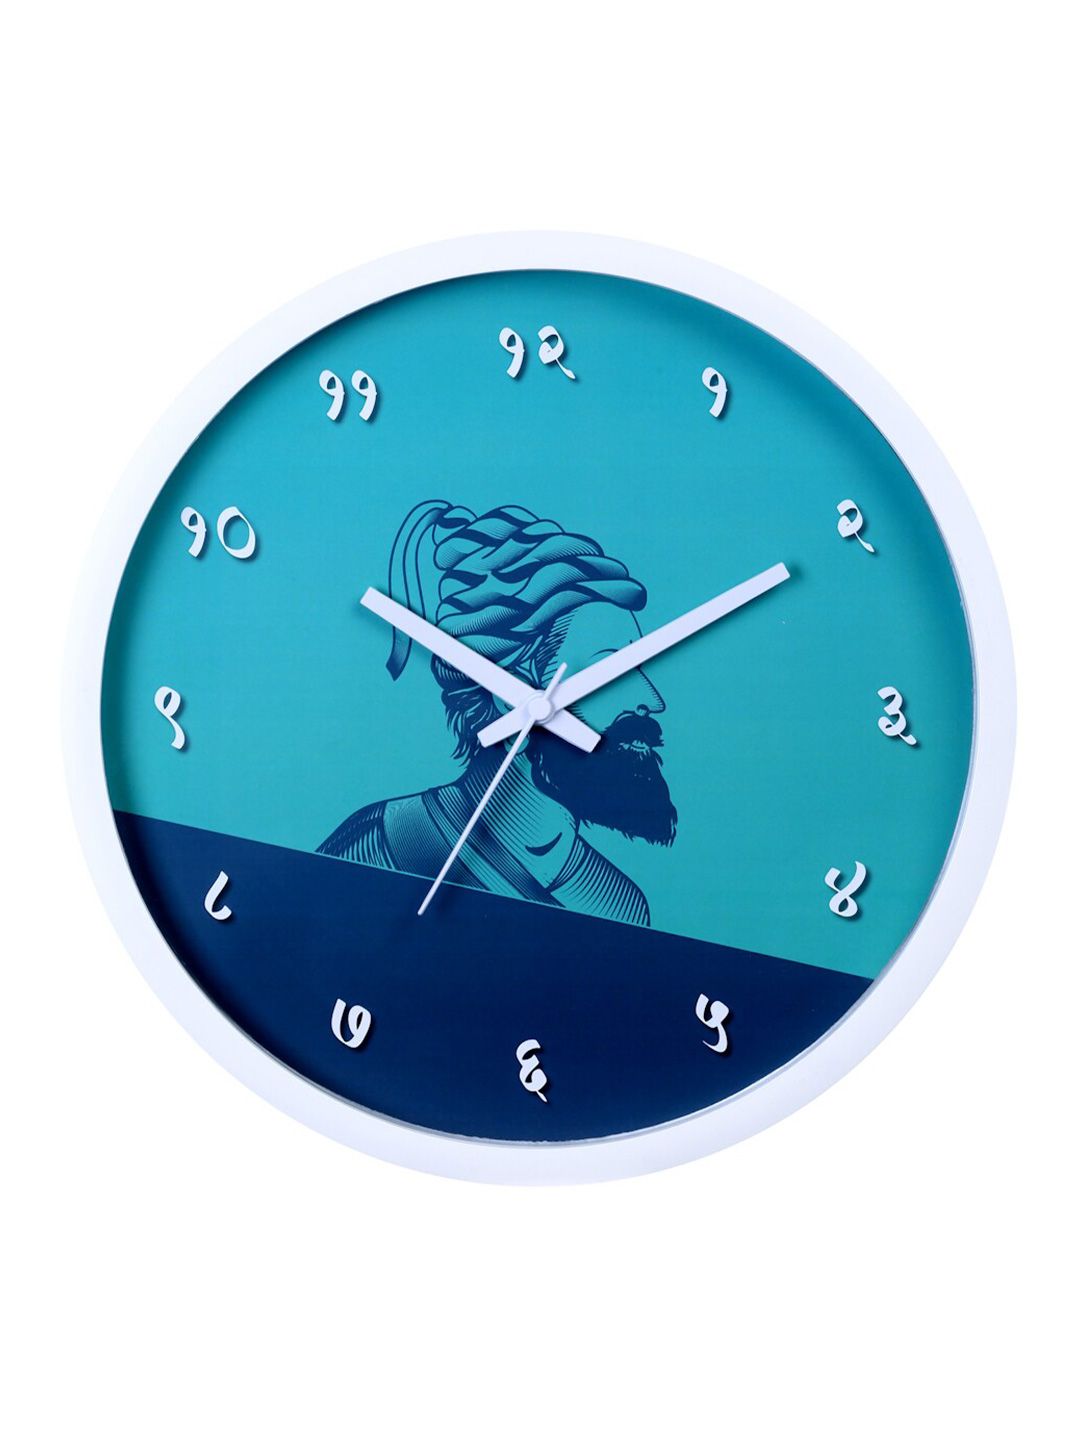 Bodh Design Blue & White Printed Contemporary Wall Clock Price in India